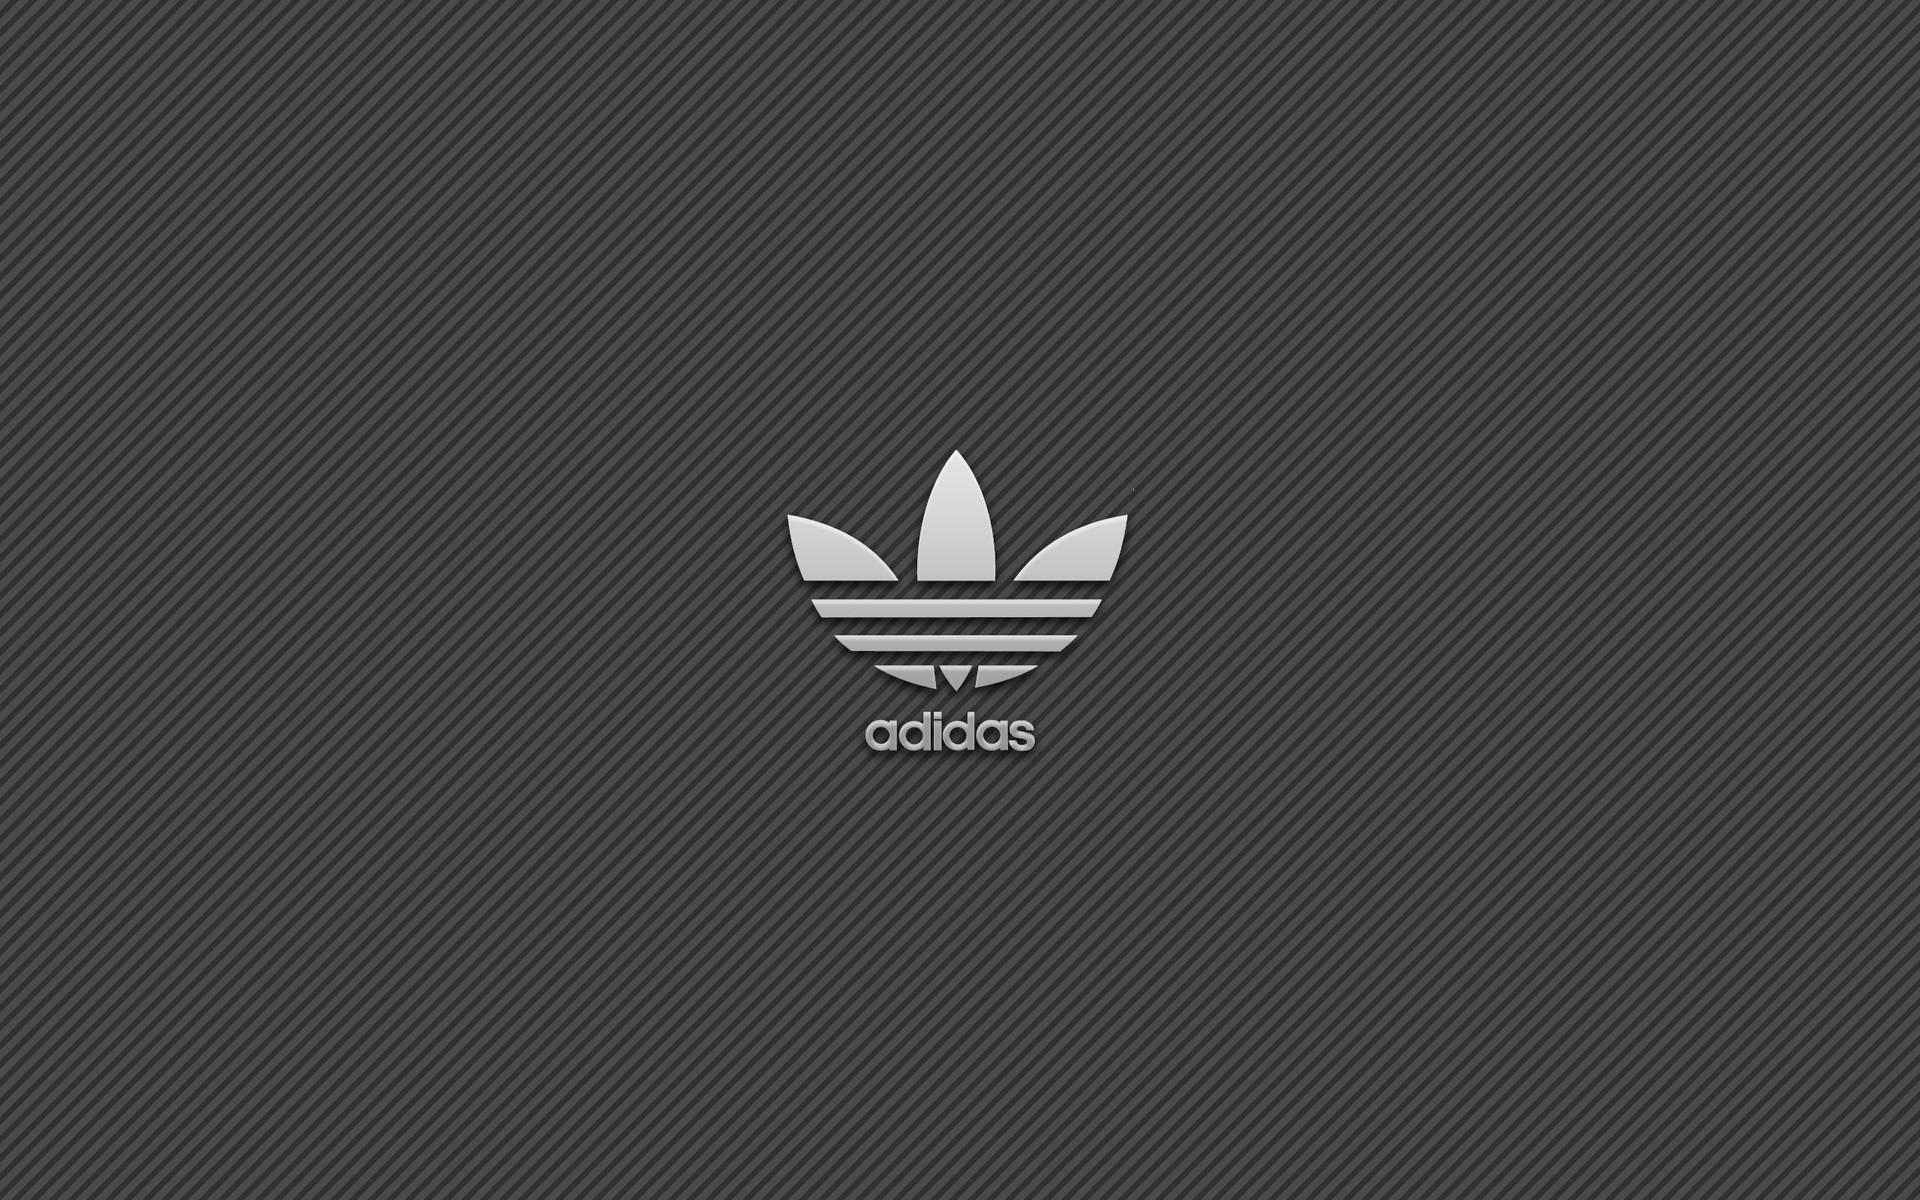 Cool 2d Adidas Logo